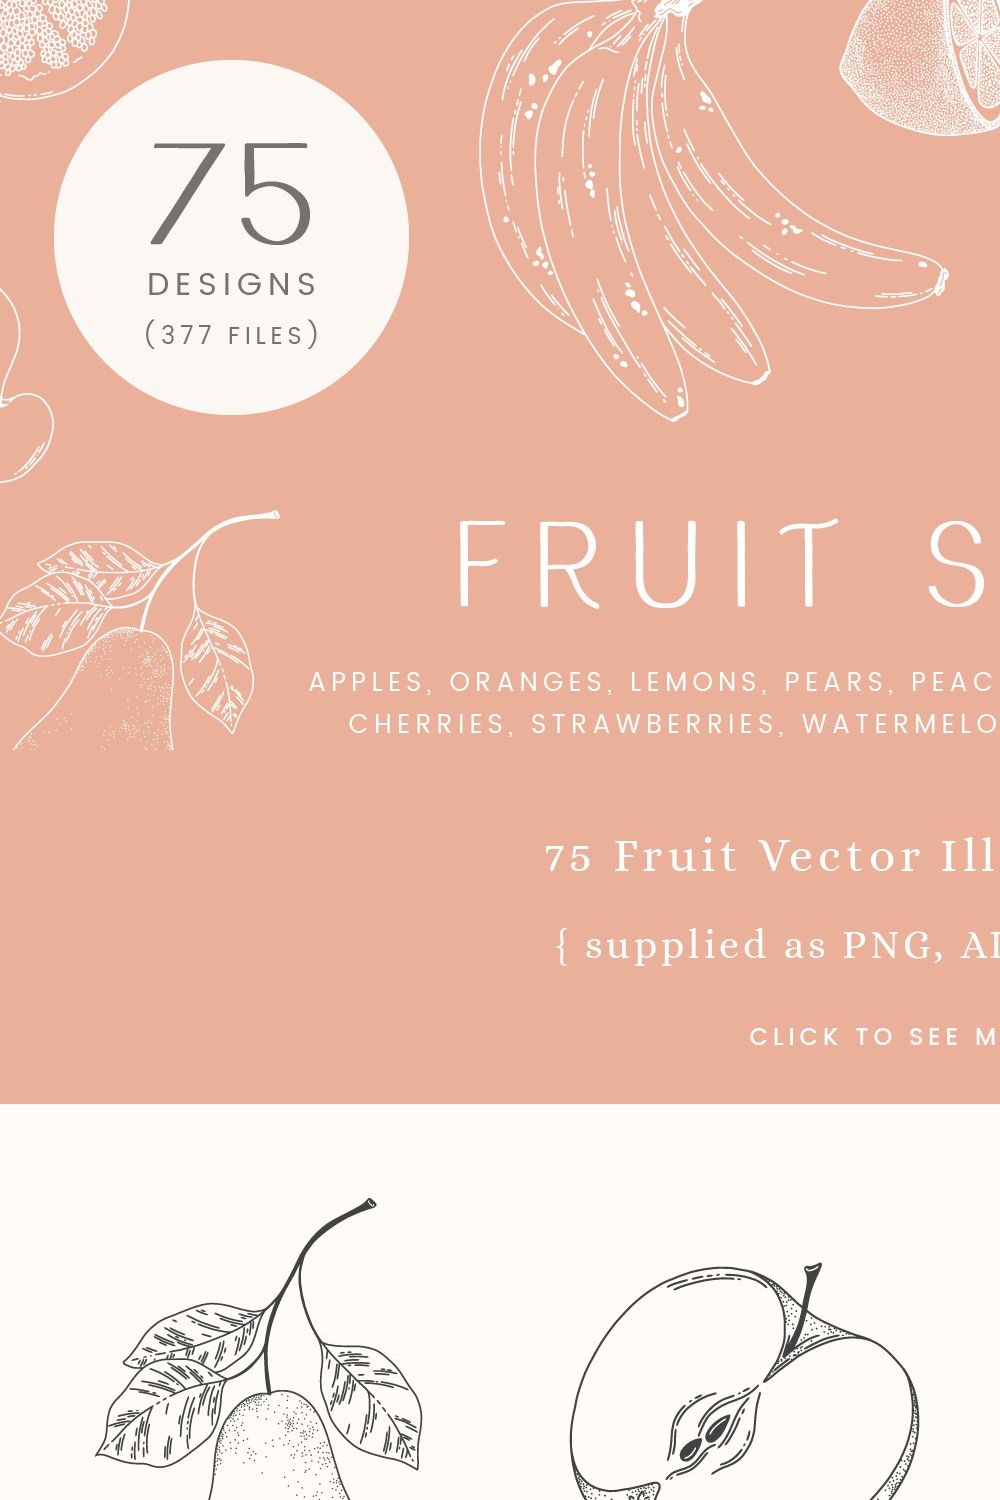 Fruit Salad Vector Illustrations pinterest preview image.